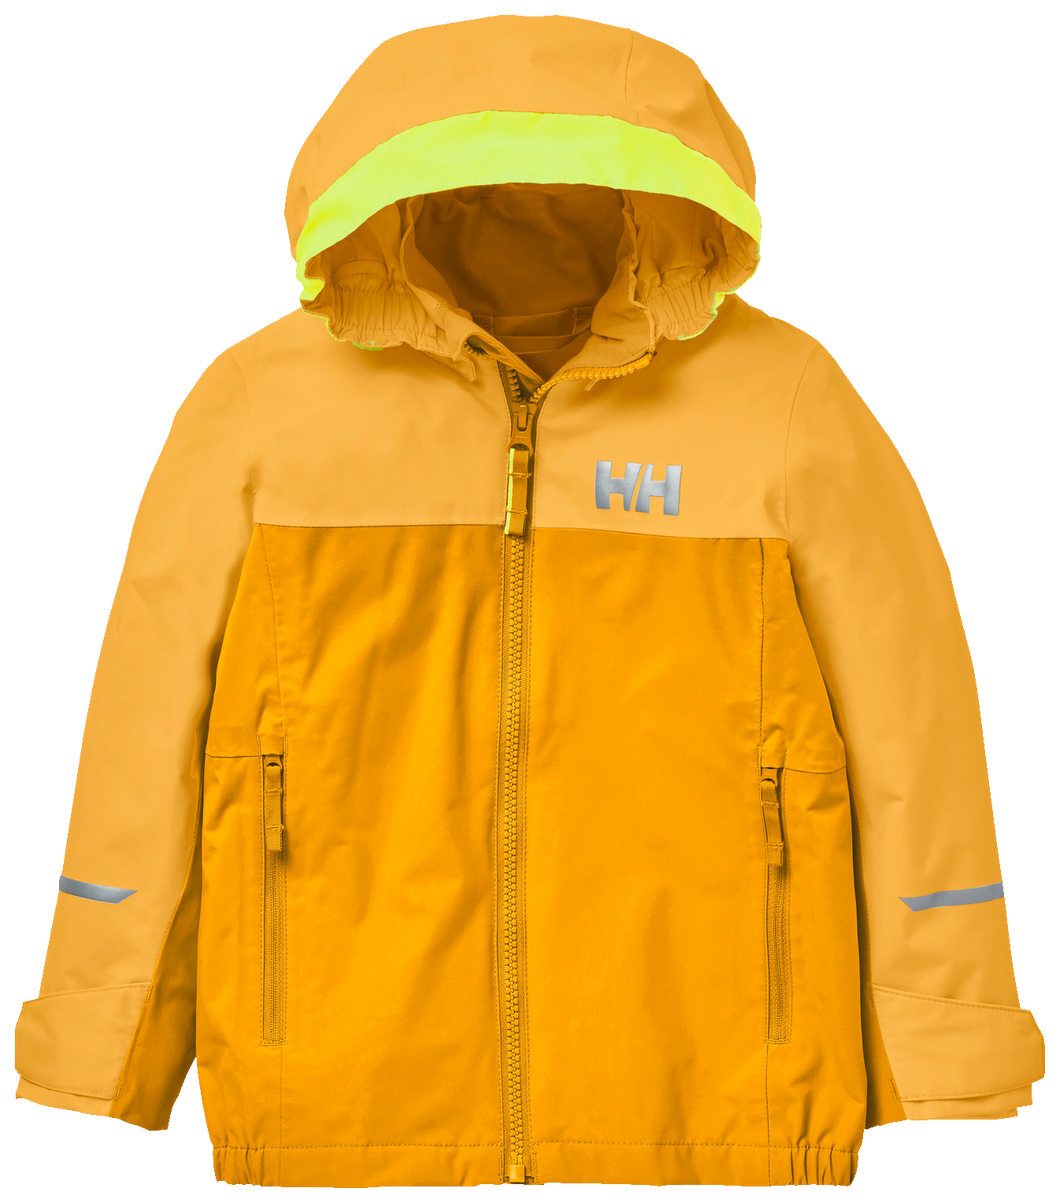 Helly Hansen Kids Shelter 2.0 Waterproof Jacket (Cloudberry)